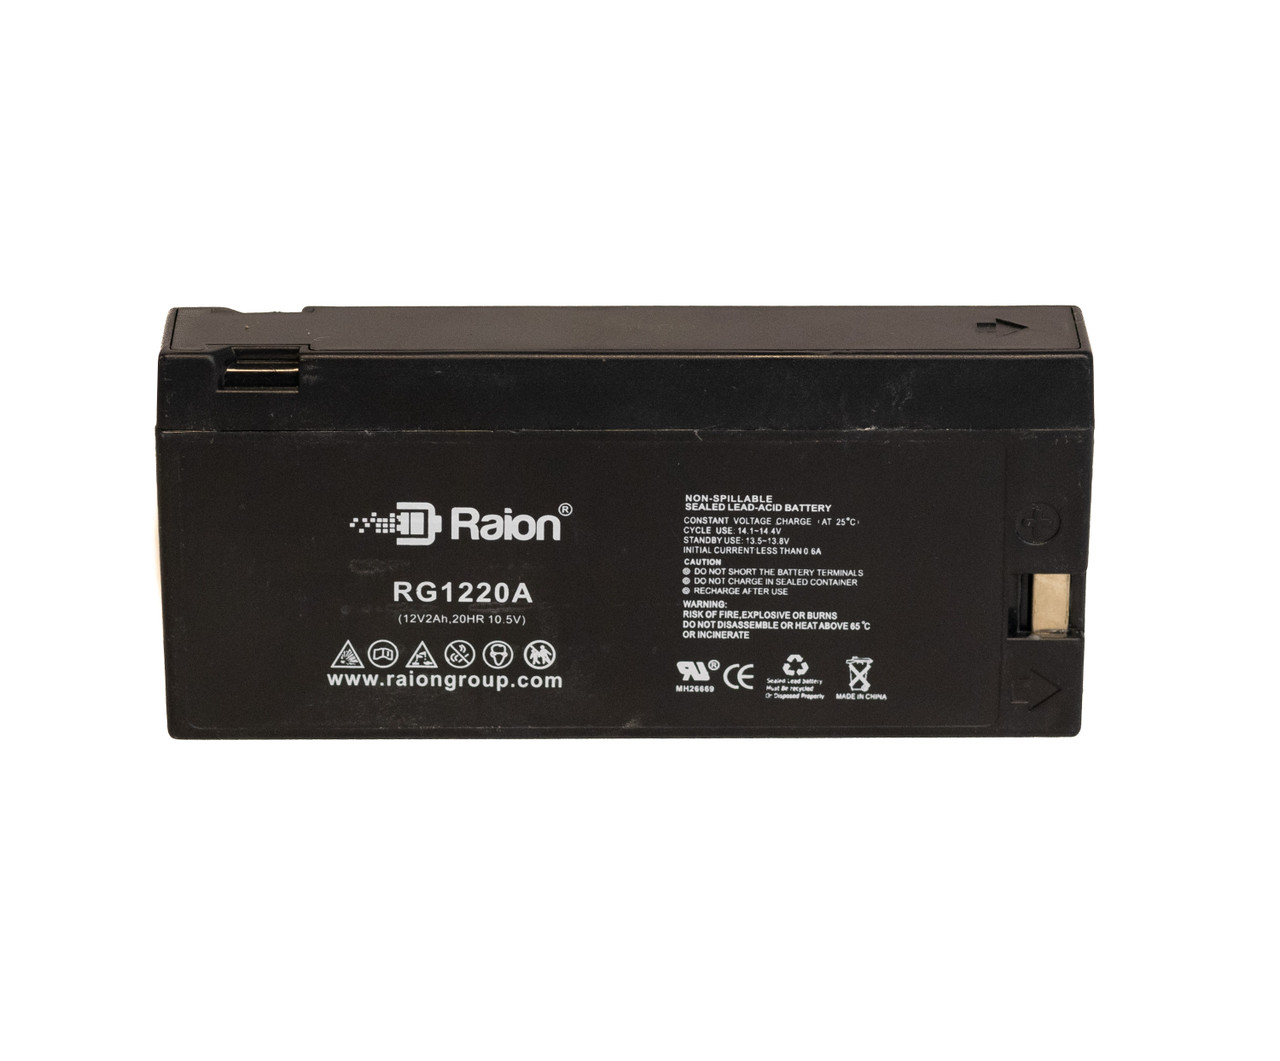 Raion Power RG1220A SLA Battery for Magnavox CVR-325